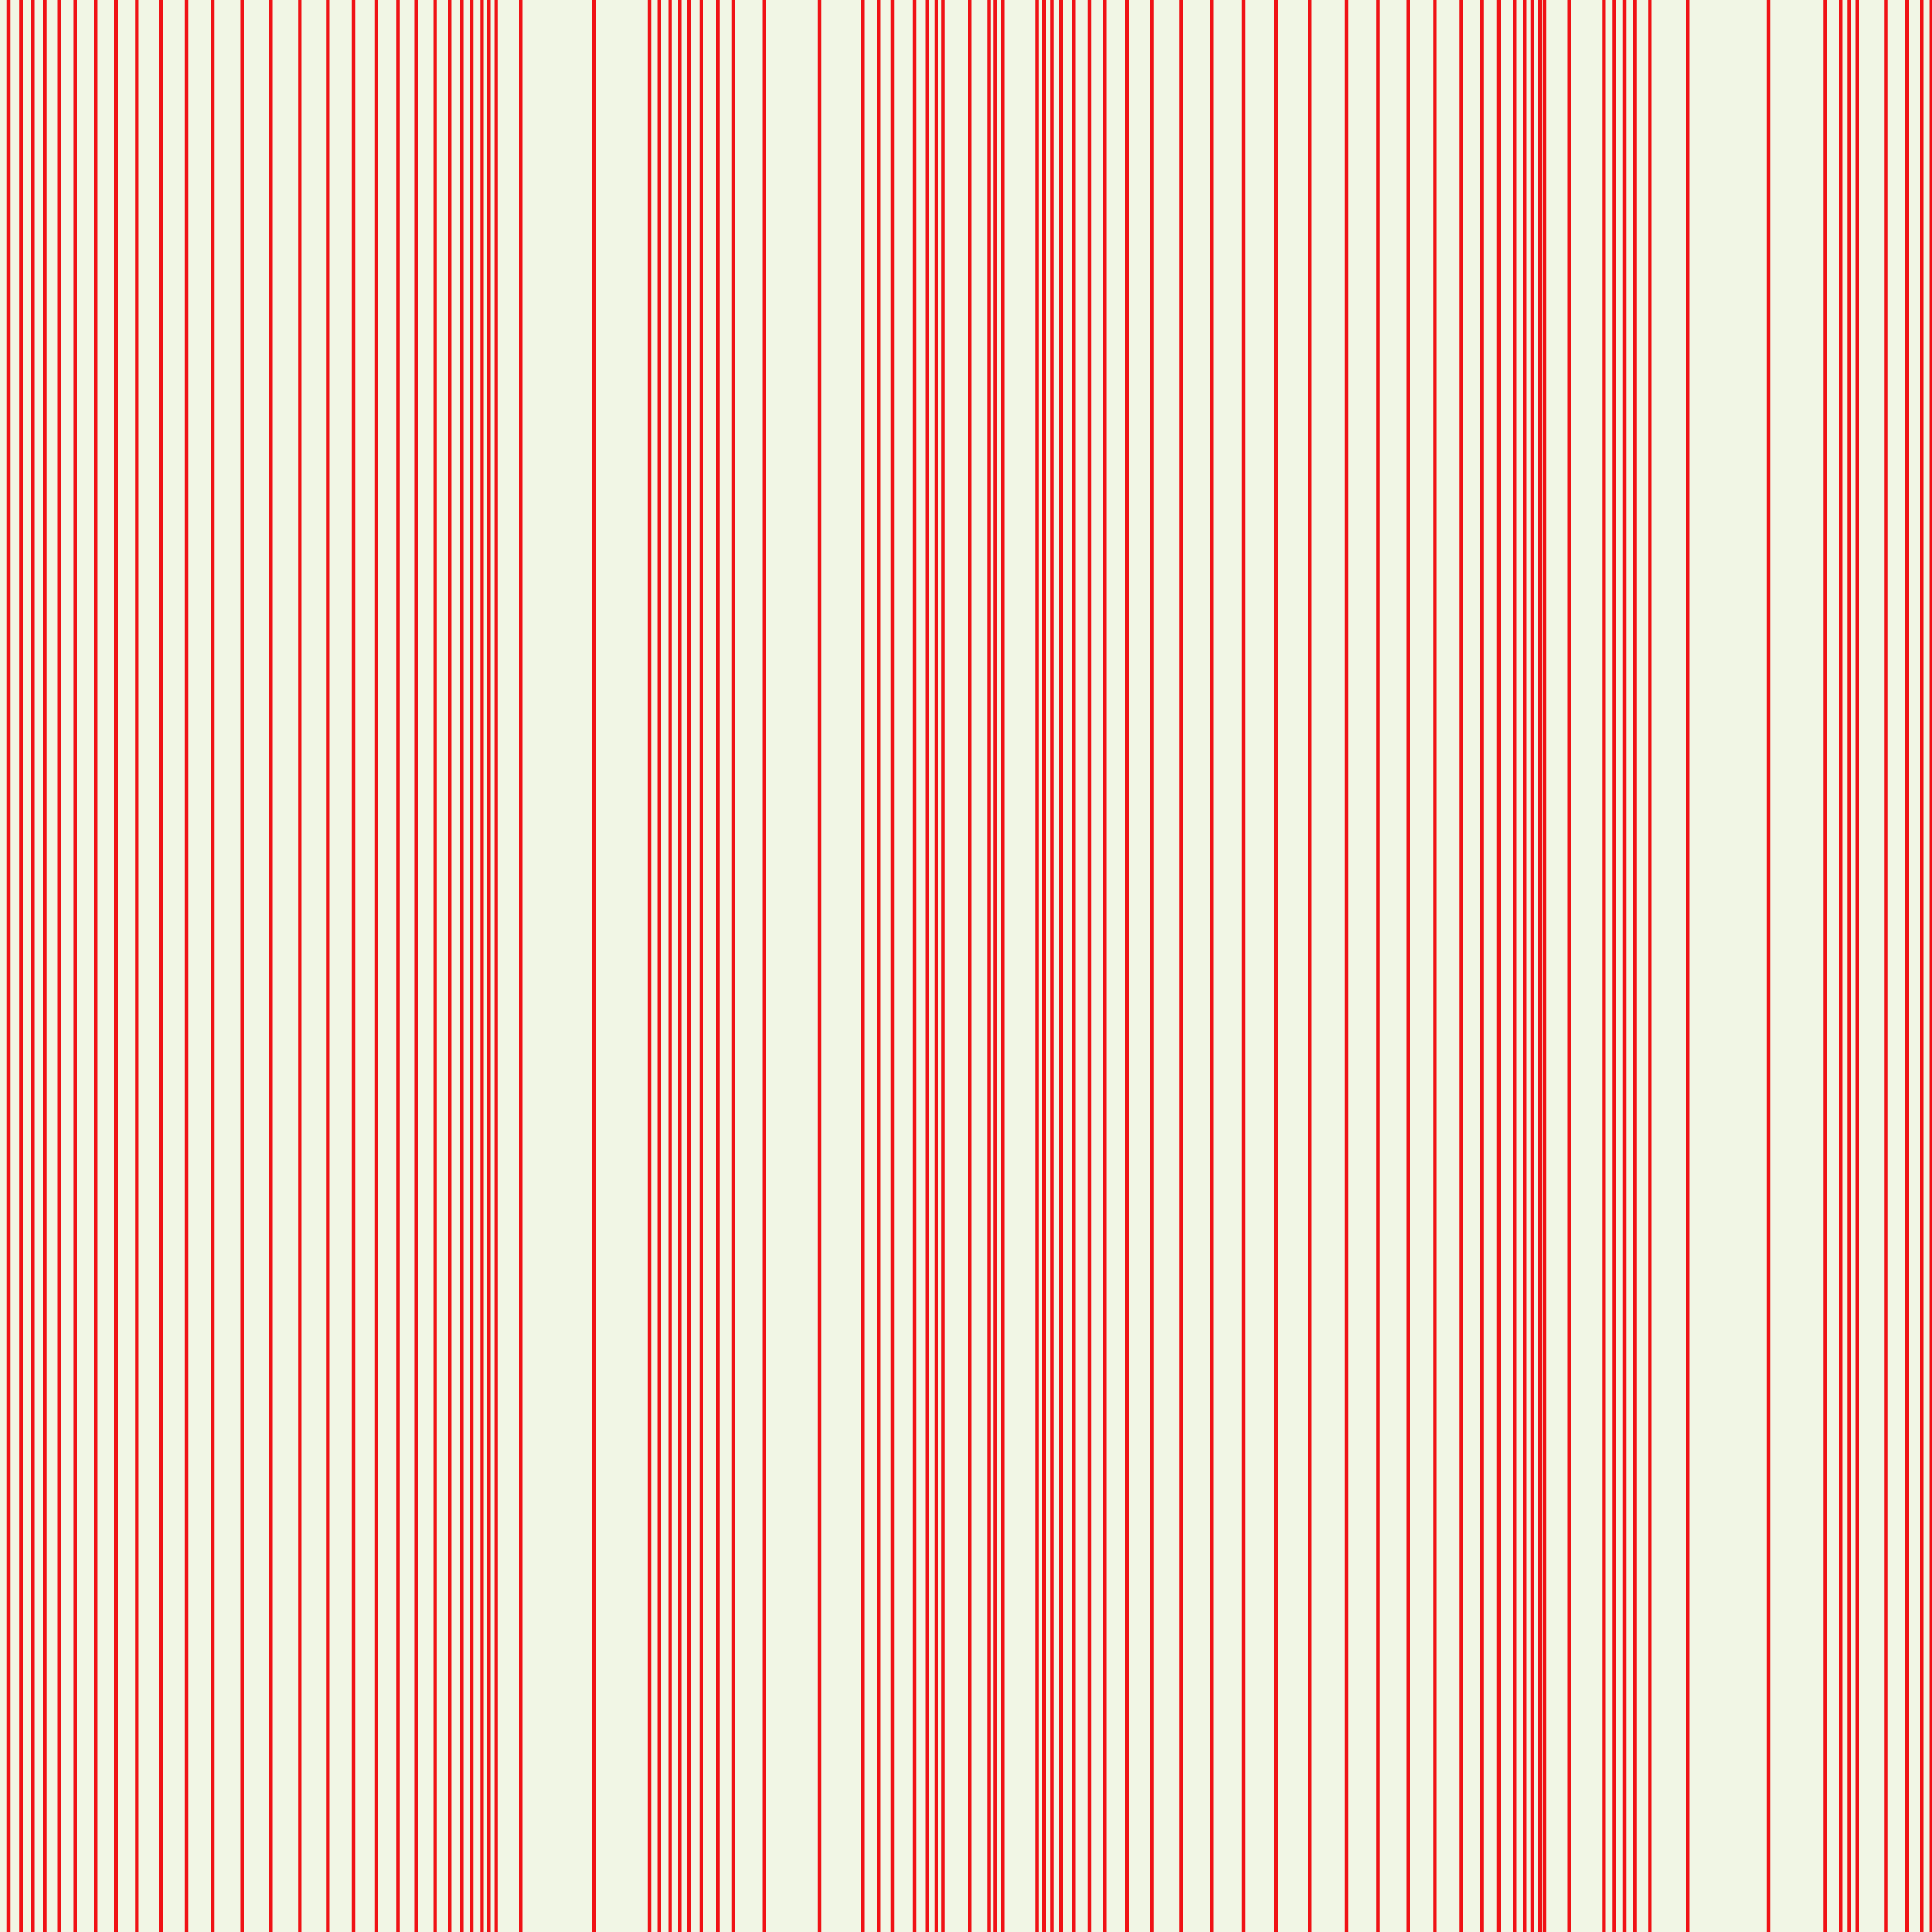 Encoded Stripe - Red